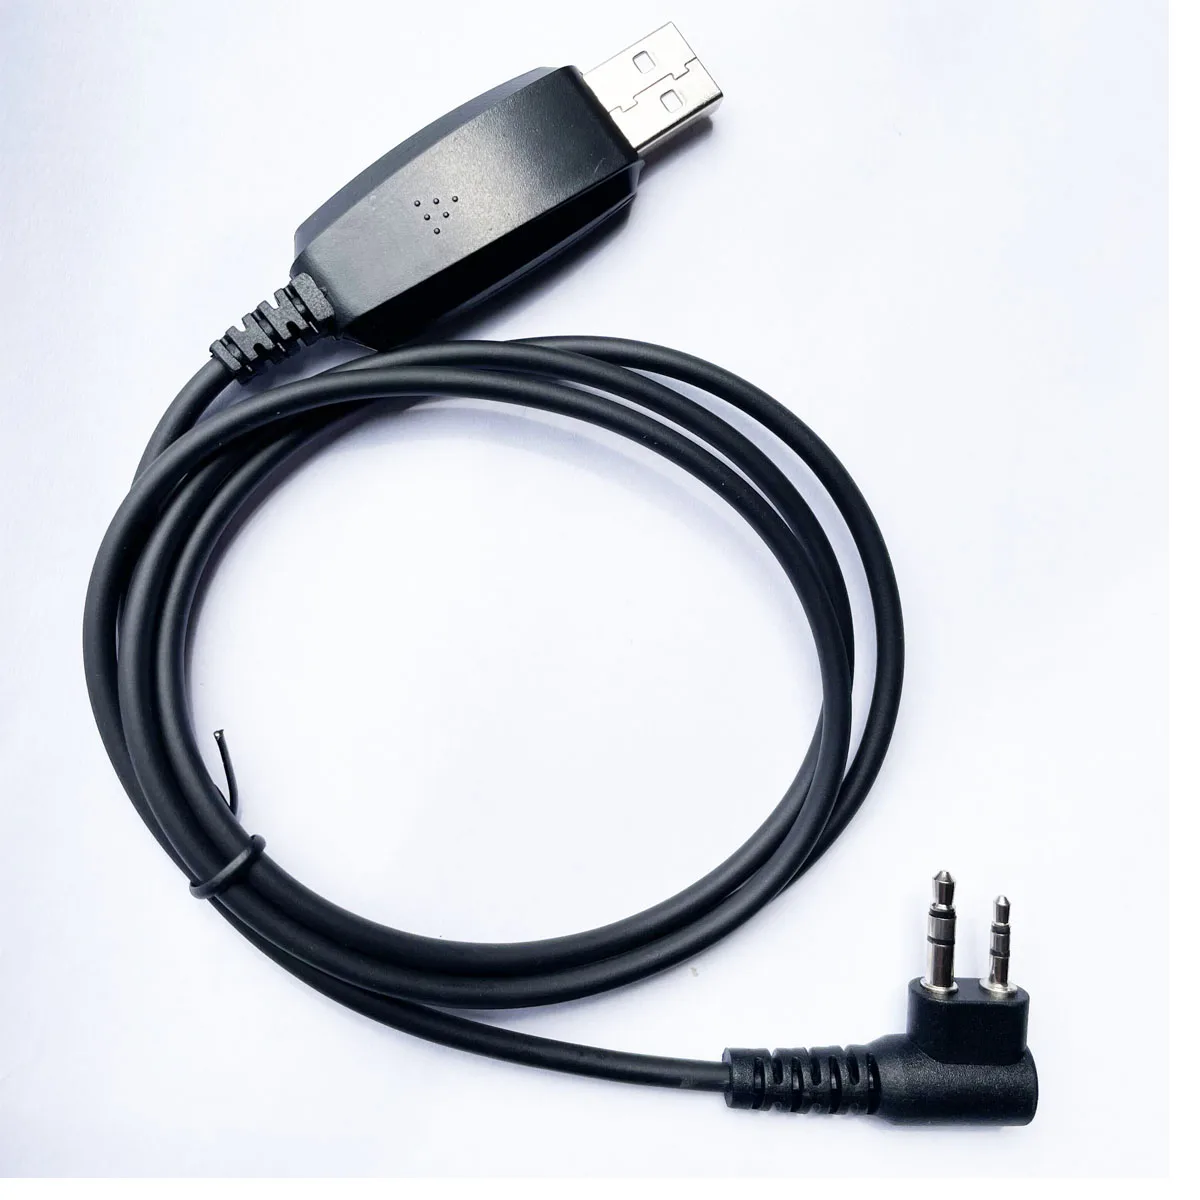 Walkie Talkie USB-Programmier kabel für Radtel RT-780 RT-770 RT-760 RT-750 RT-730 Funkgerät